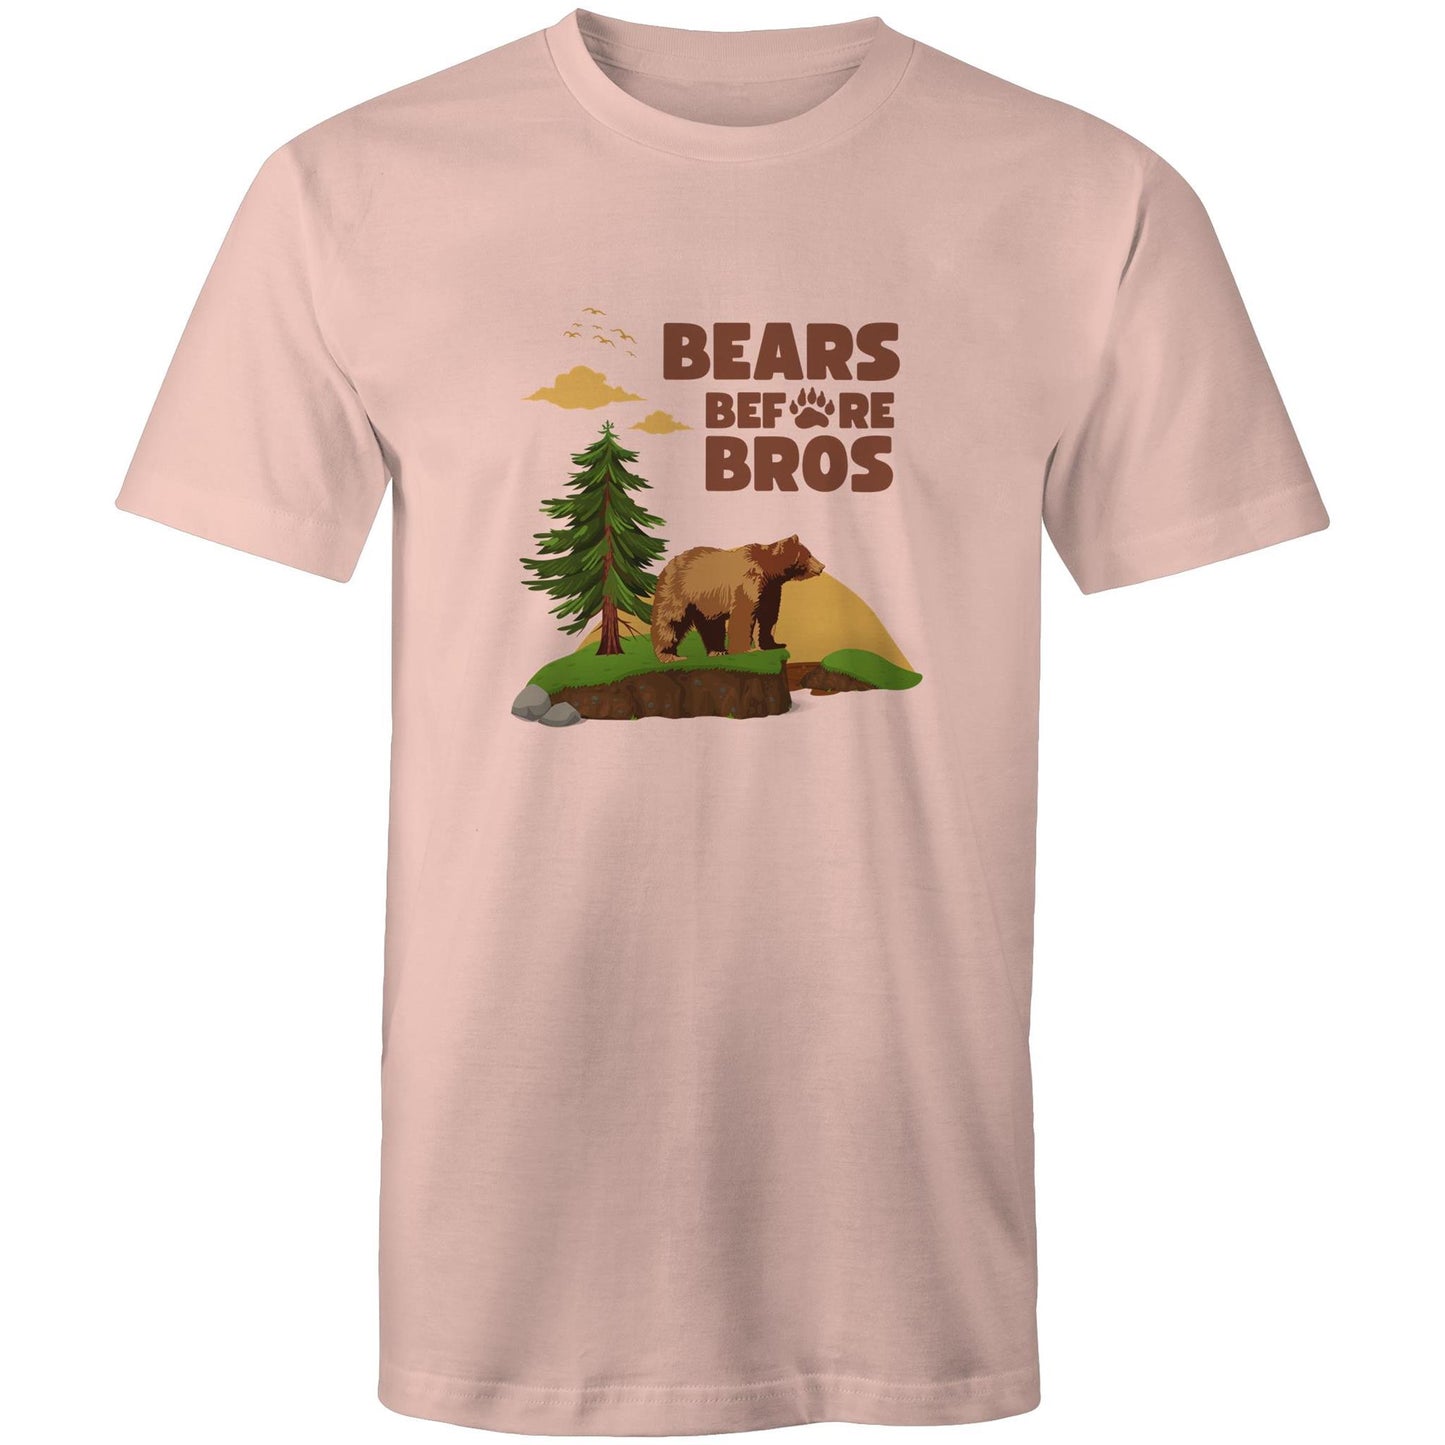 Bears  before bros AS Colour Staple - Mens T-Shirt